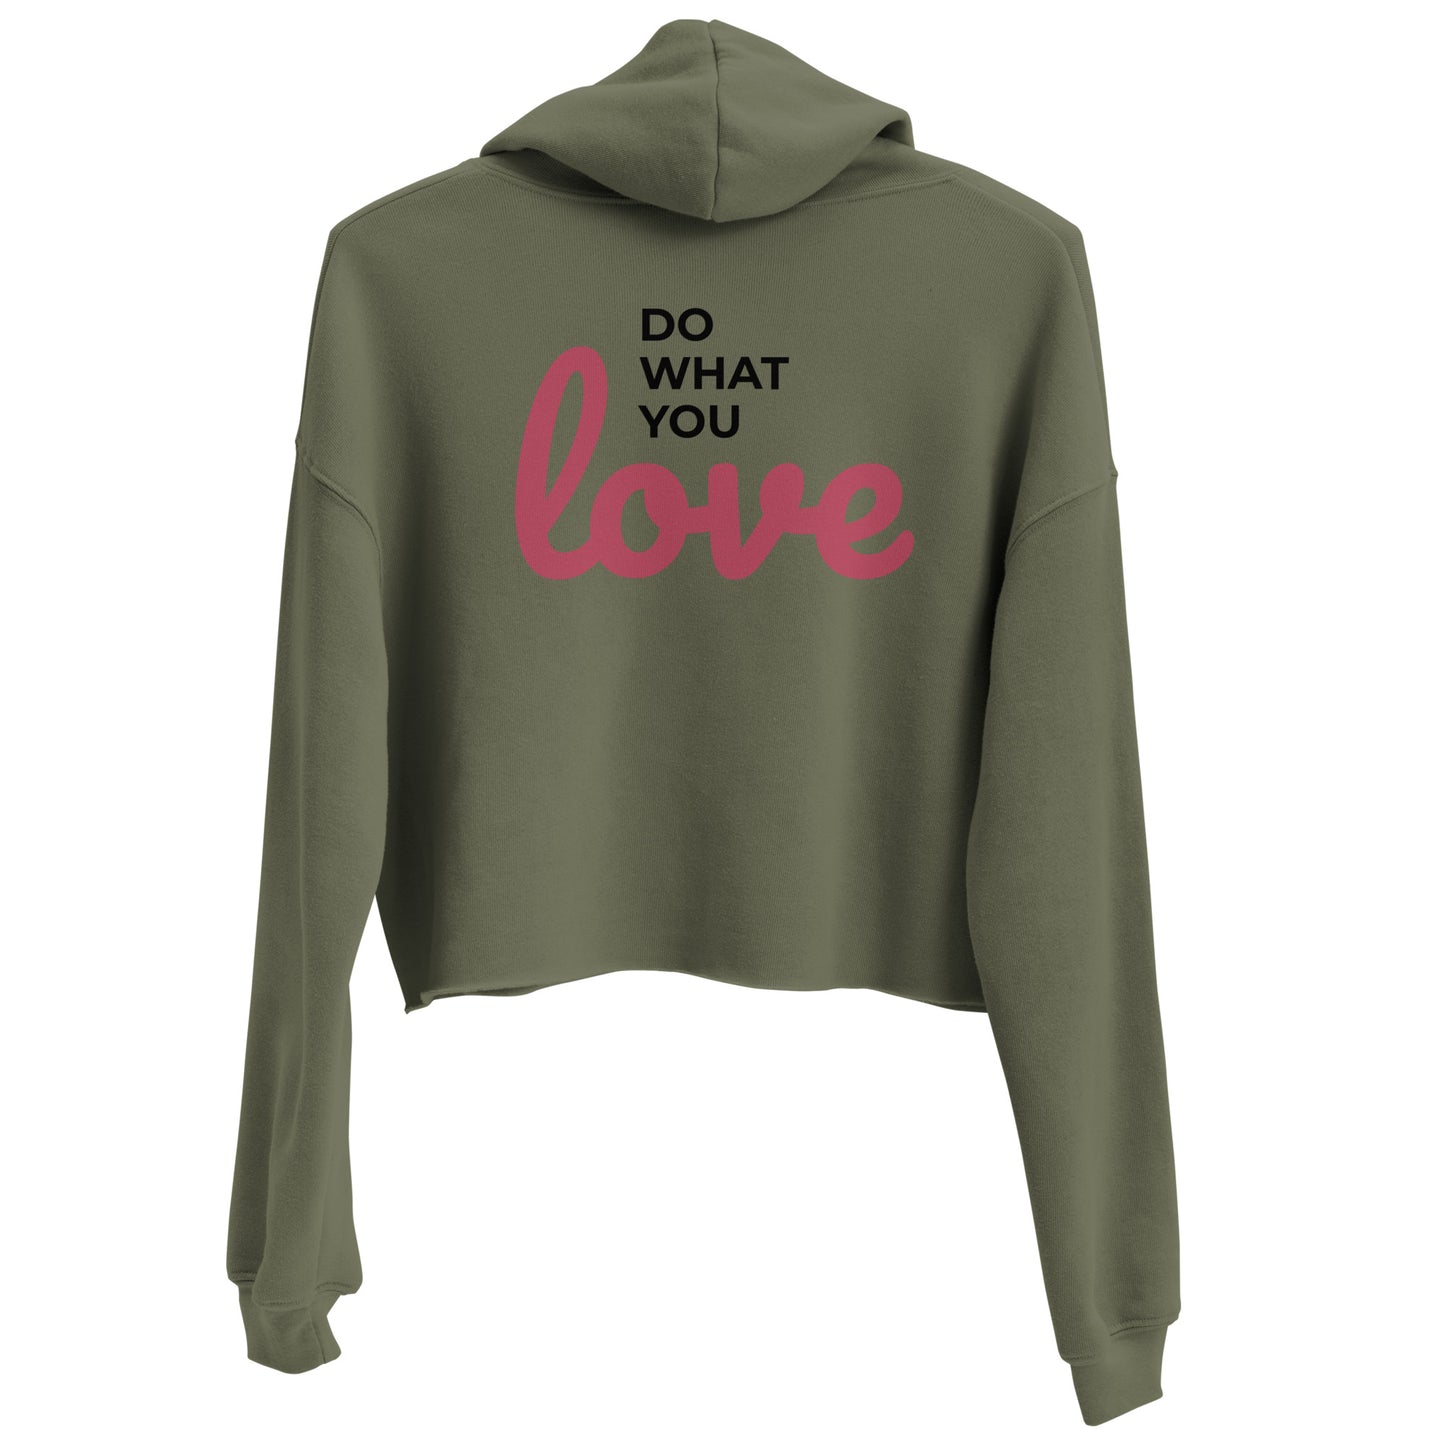 Do What You Love Cropped Sweatshirt